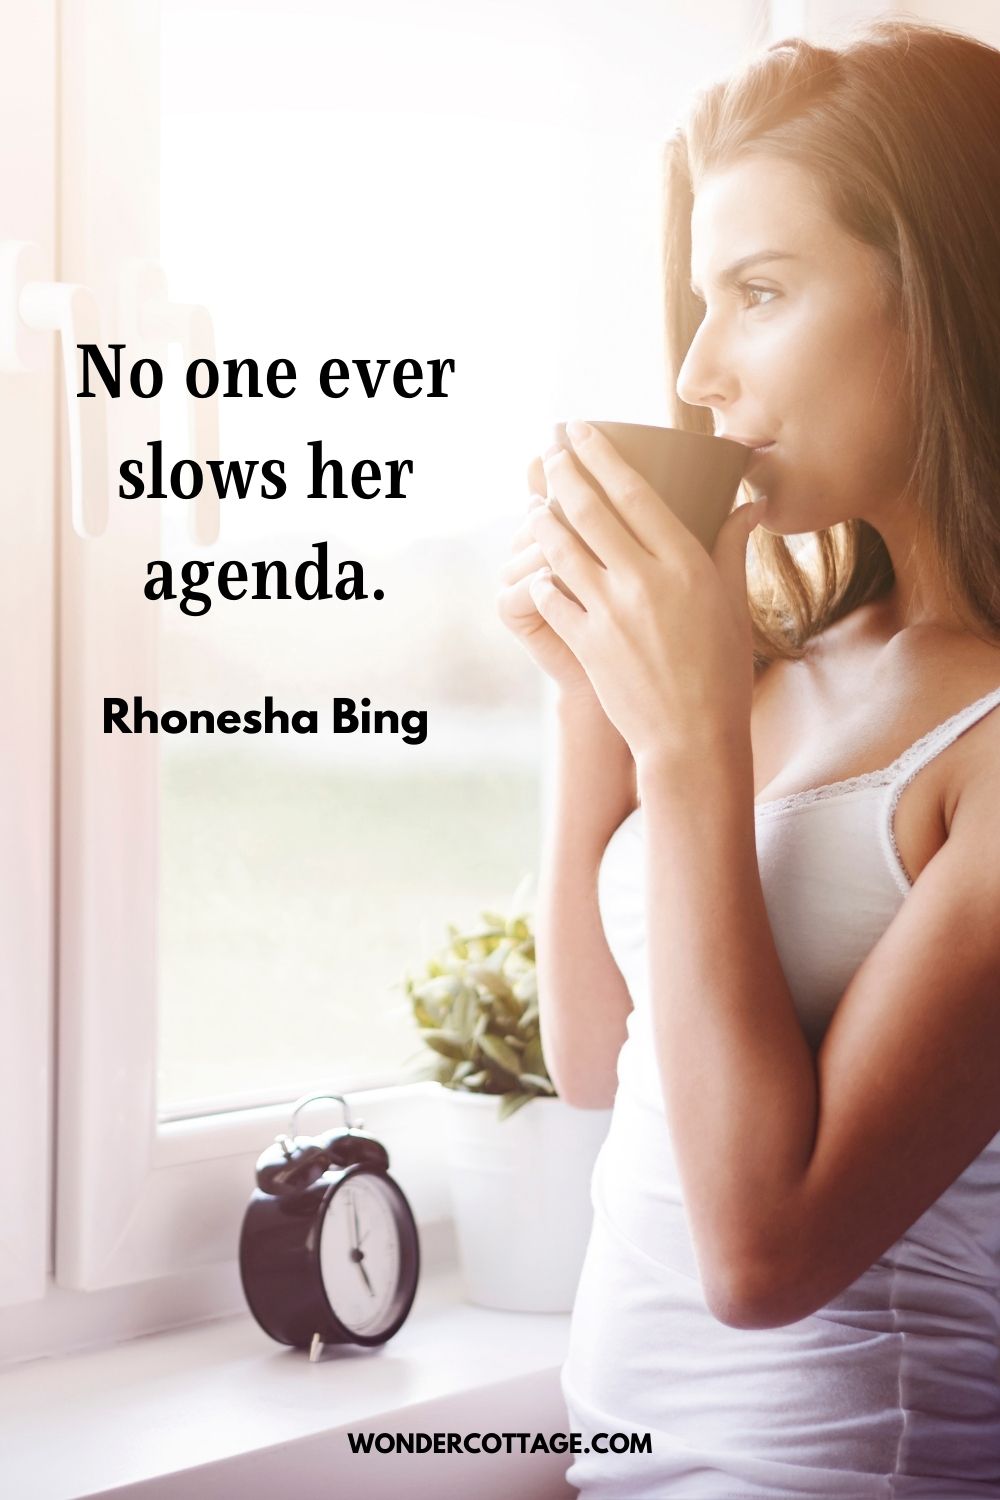 No one ever slows her agenda." Rhonesha Bing